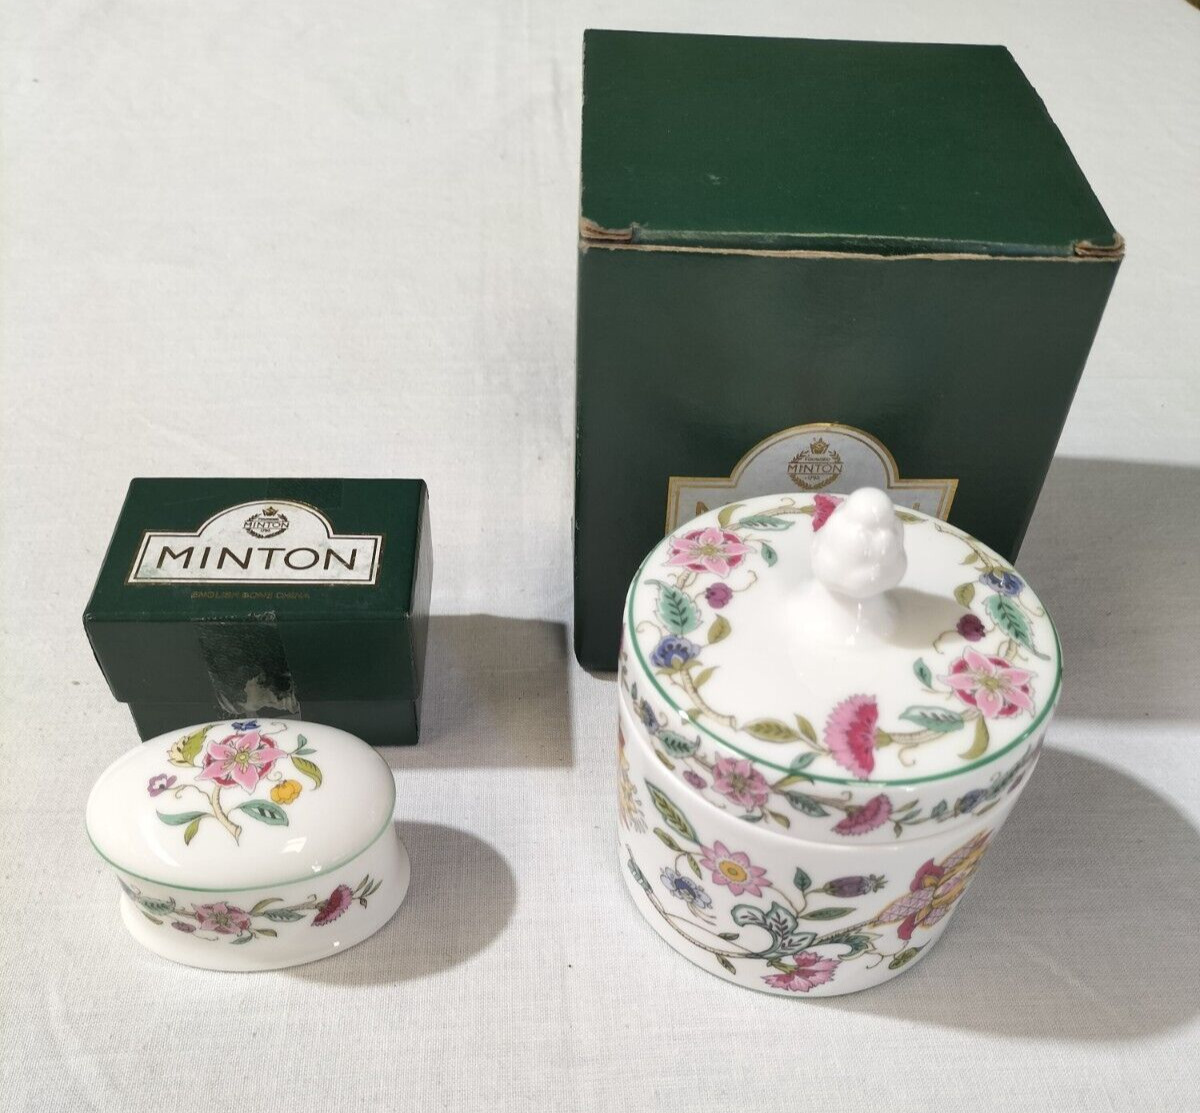 Minton Haddon Hall Stunning Candy Box & Oval Box - Original Boxes Fine Condition